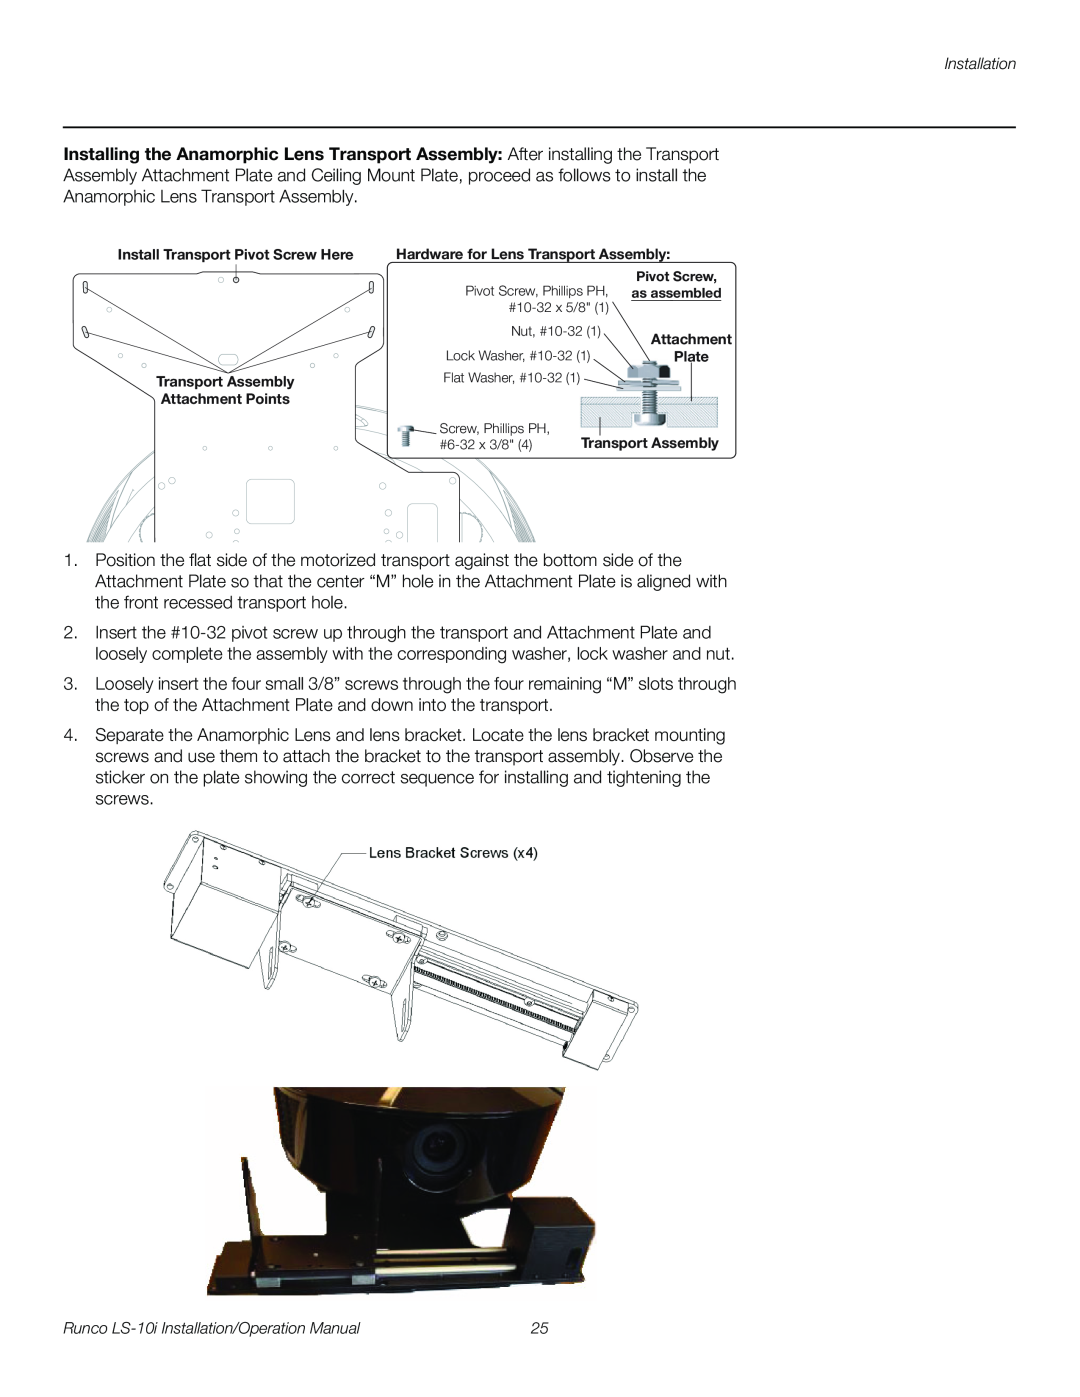 Runco LS-10I operation manual Anamorphic Lens Transport Assembly 